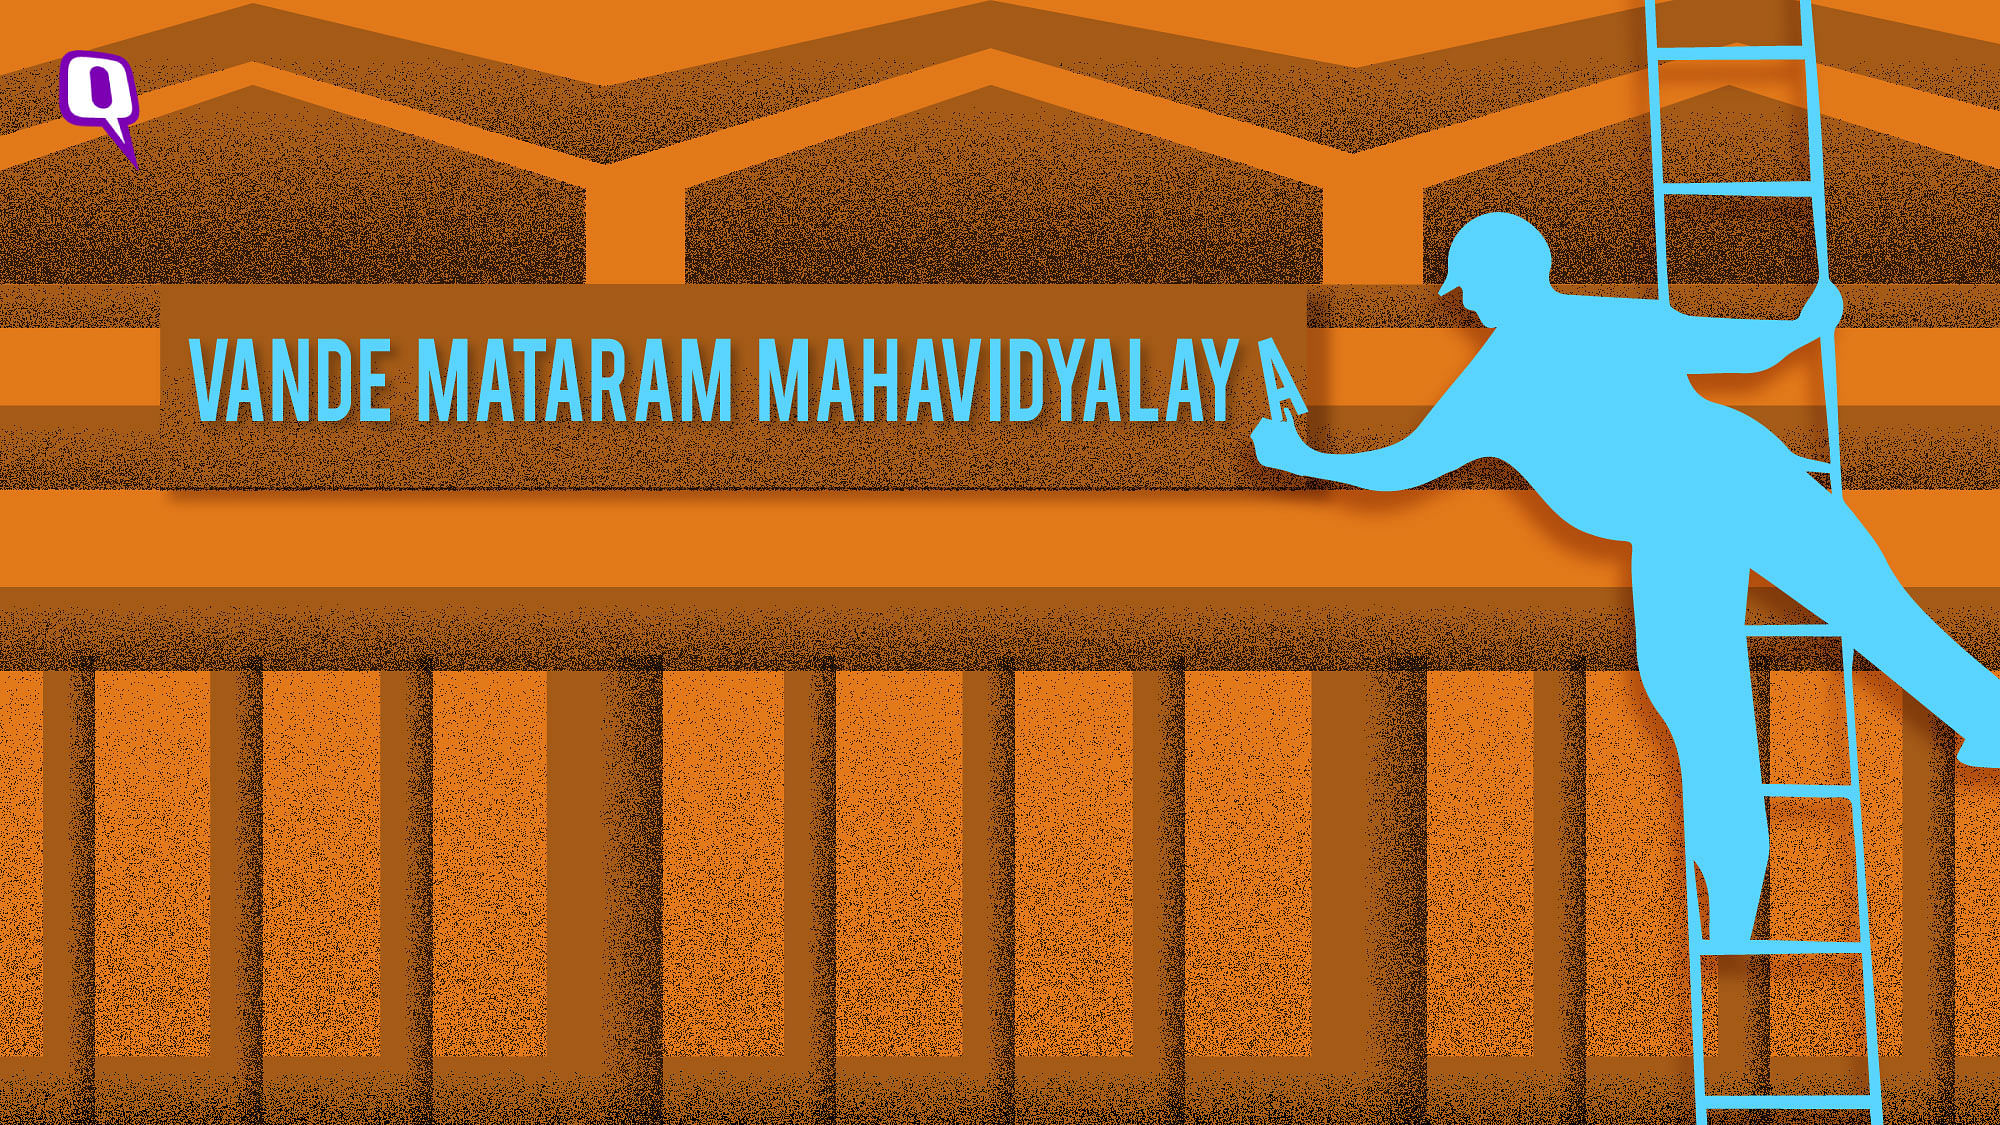 Dyal Singh College was recently renamed ‘Vande Mataram Mahavidyalaya’.